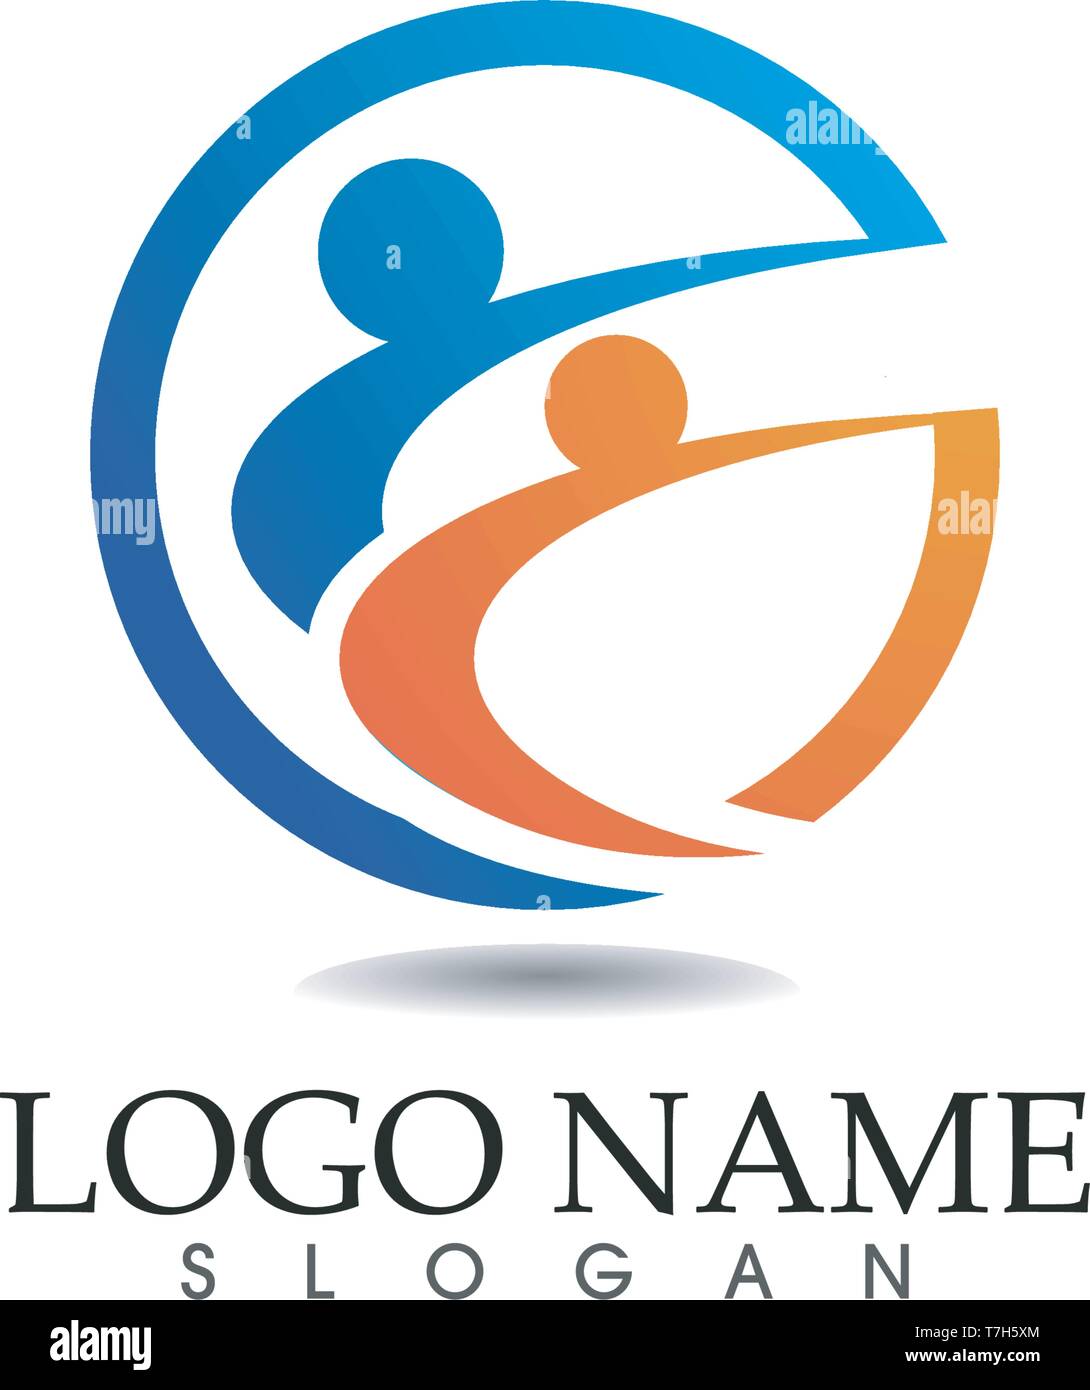 Adoption care logo and symbol Stock Vector